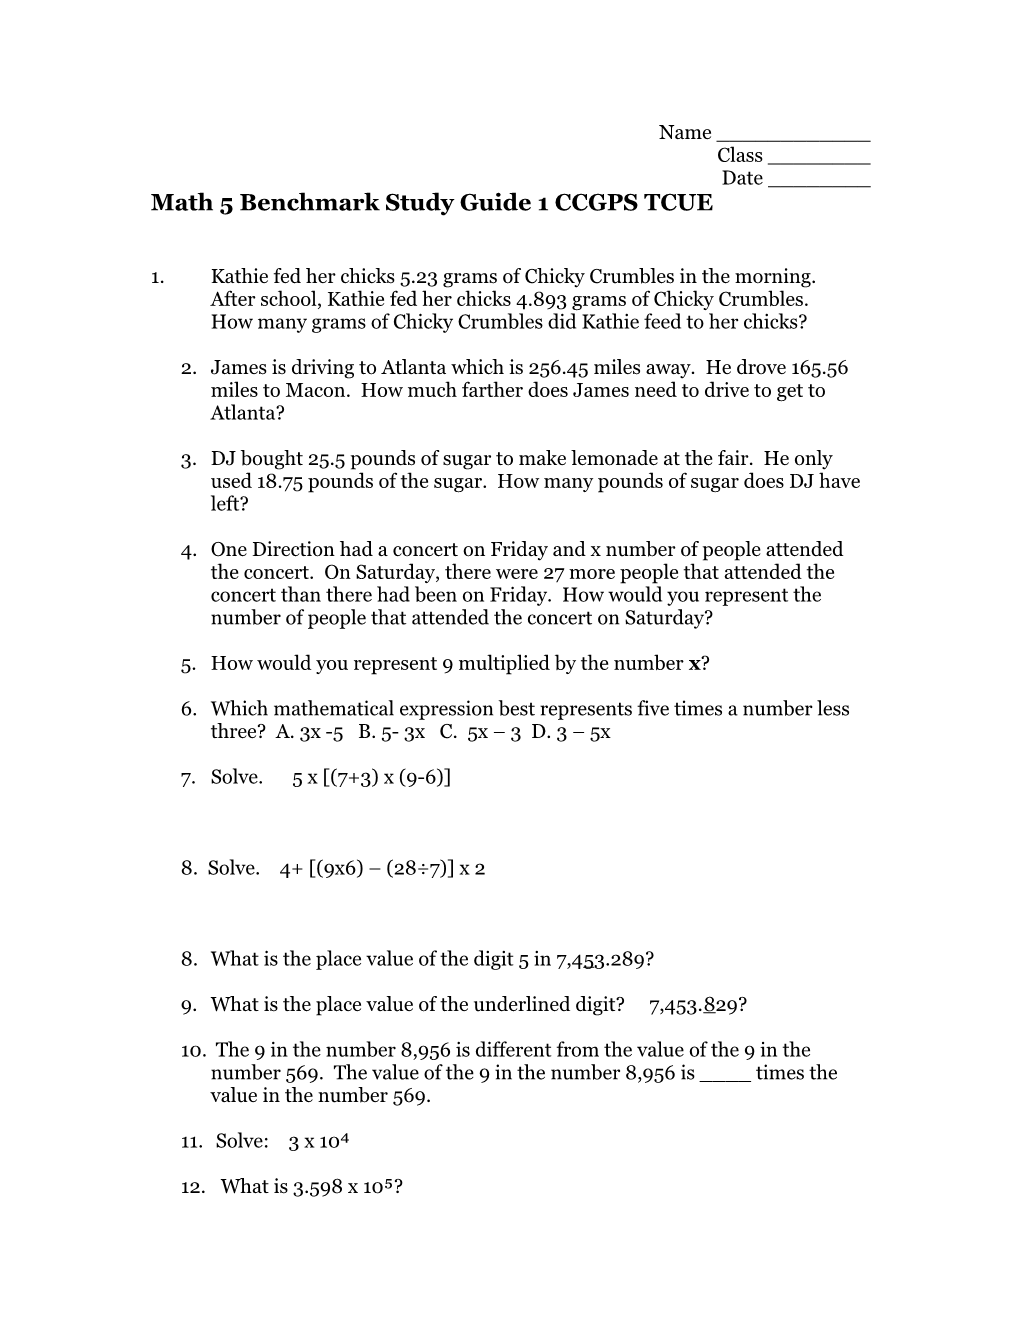 Math 5 Benchmark Study Guide 1 CCGPS TCUE